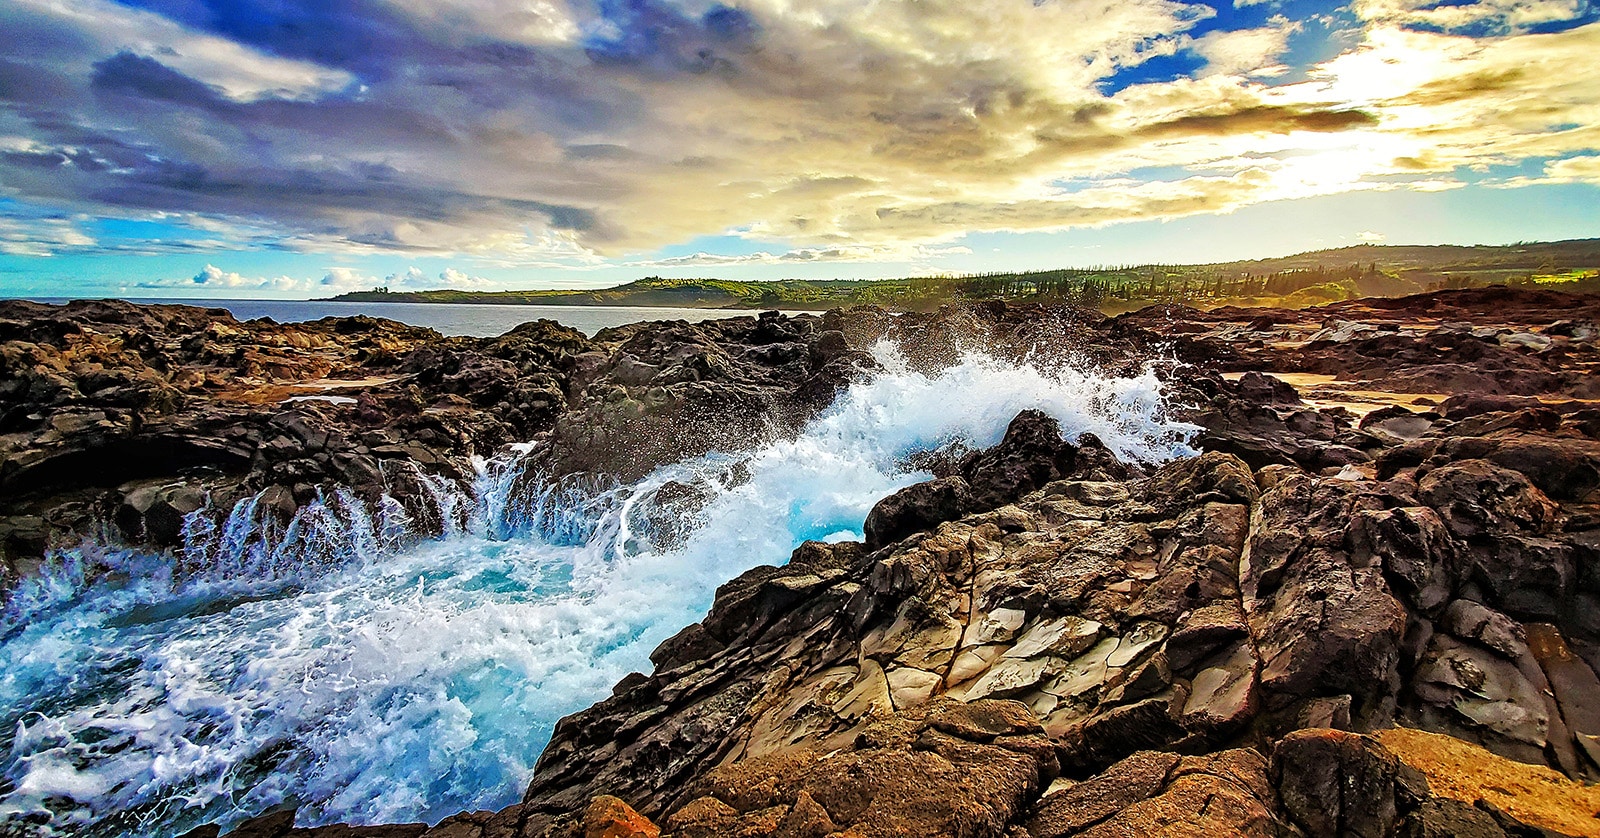 "Maui Coast" Photograpy by Eric Wiles